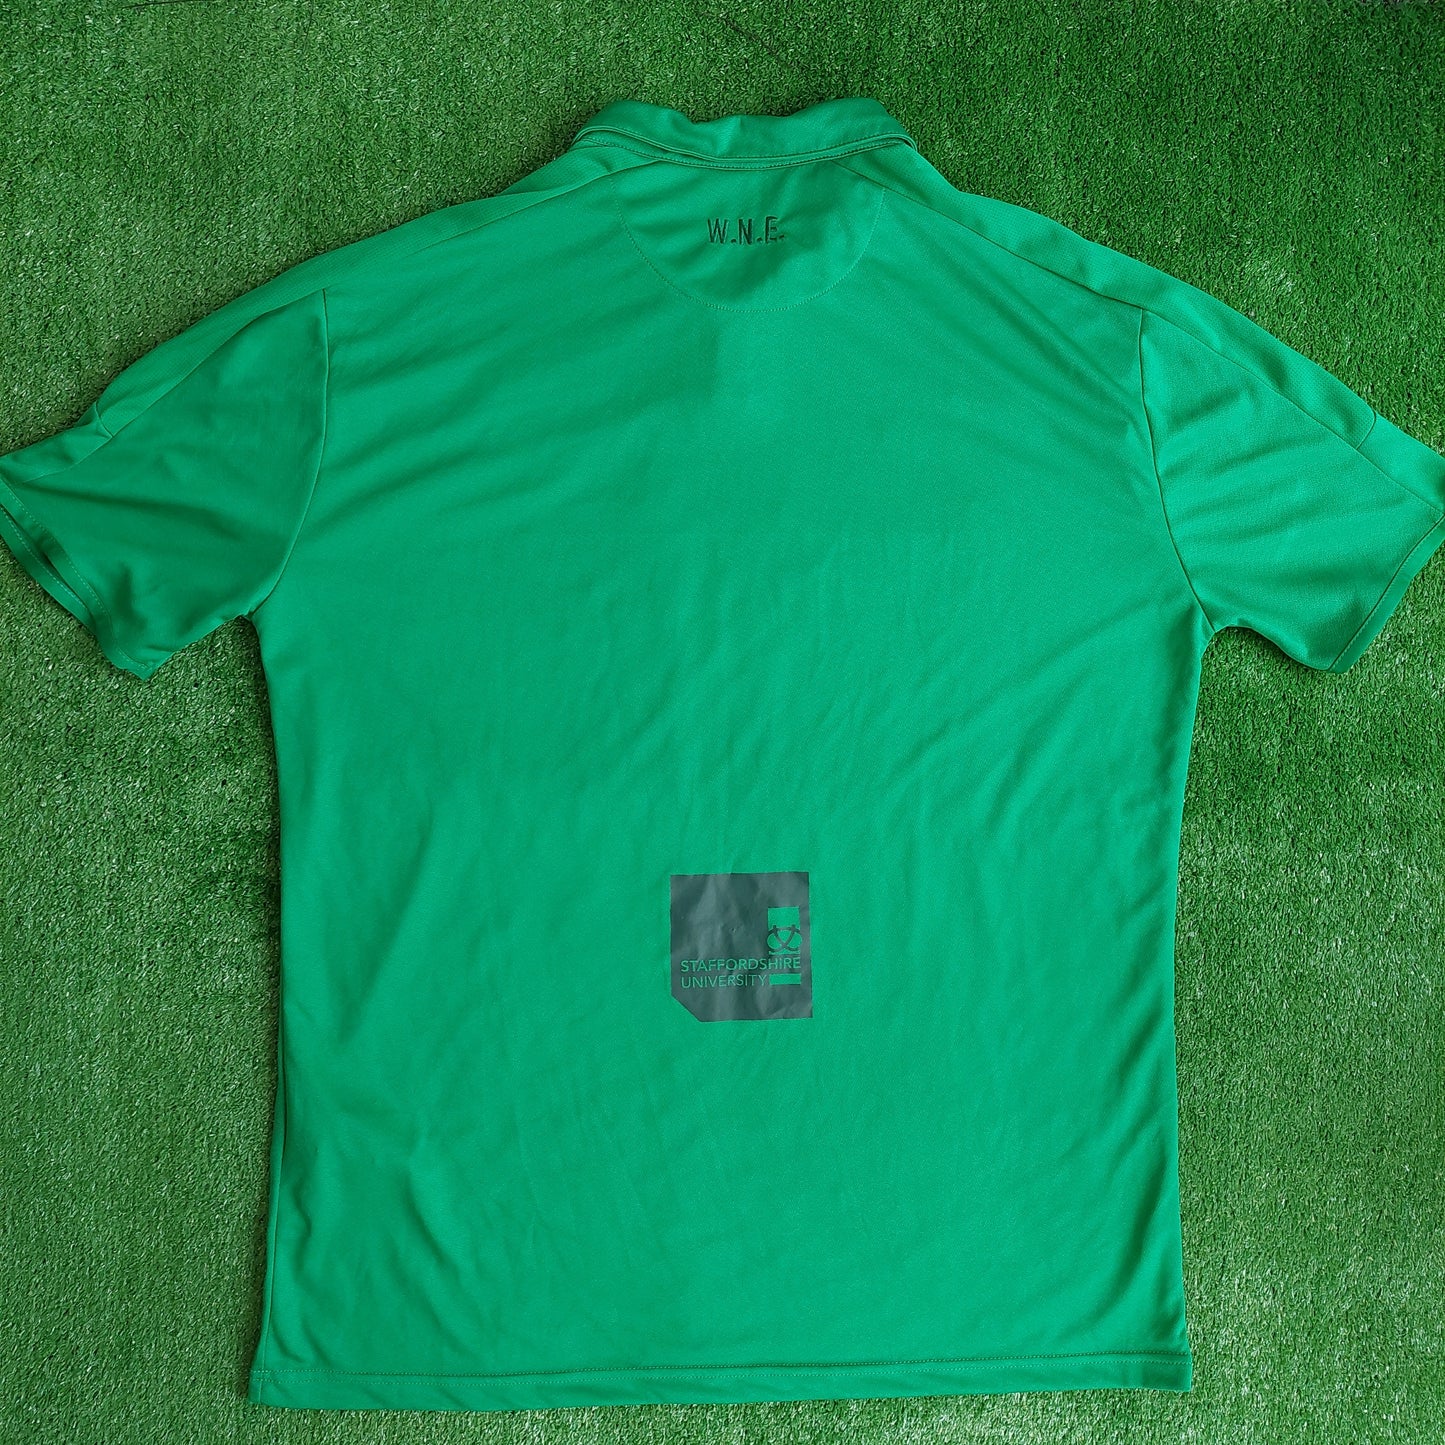 Port Vale 2020/21 Goalkeeper Shirt (Excellent) - Size 3XL